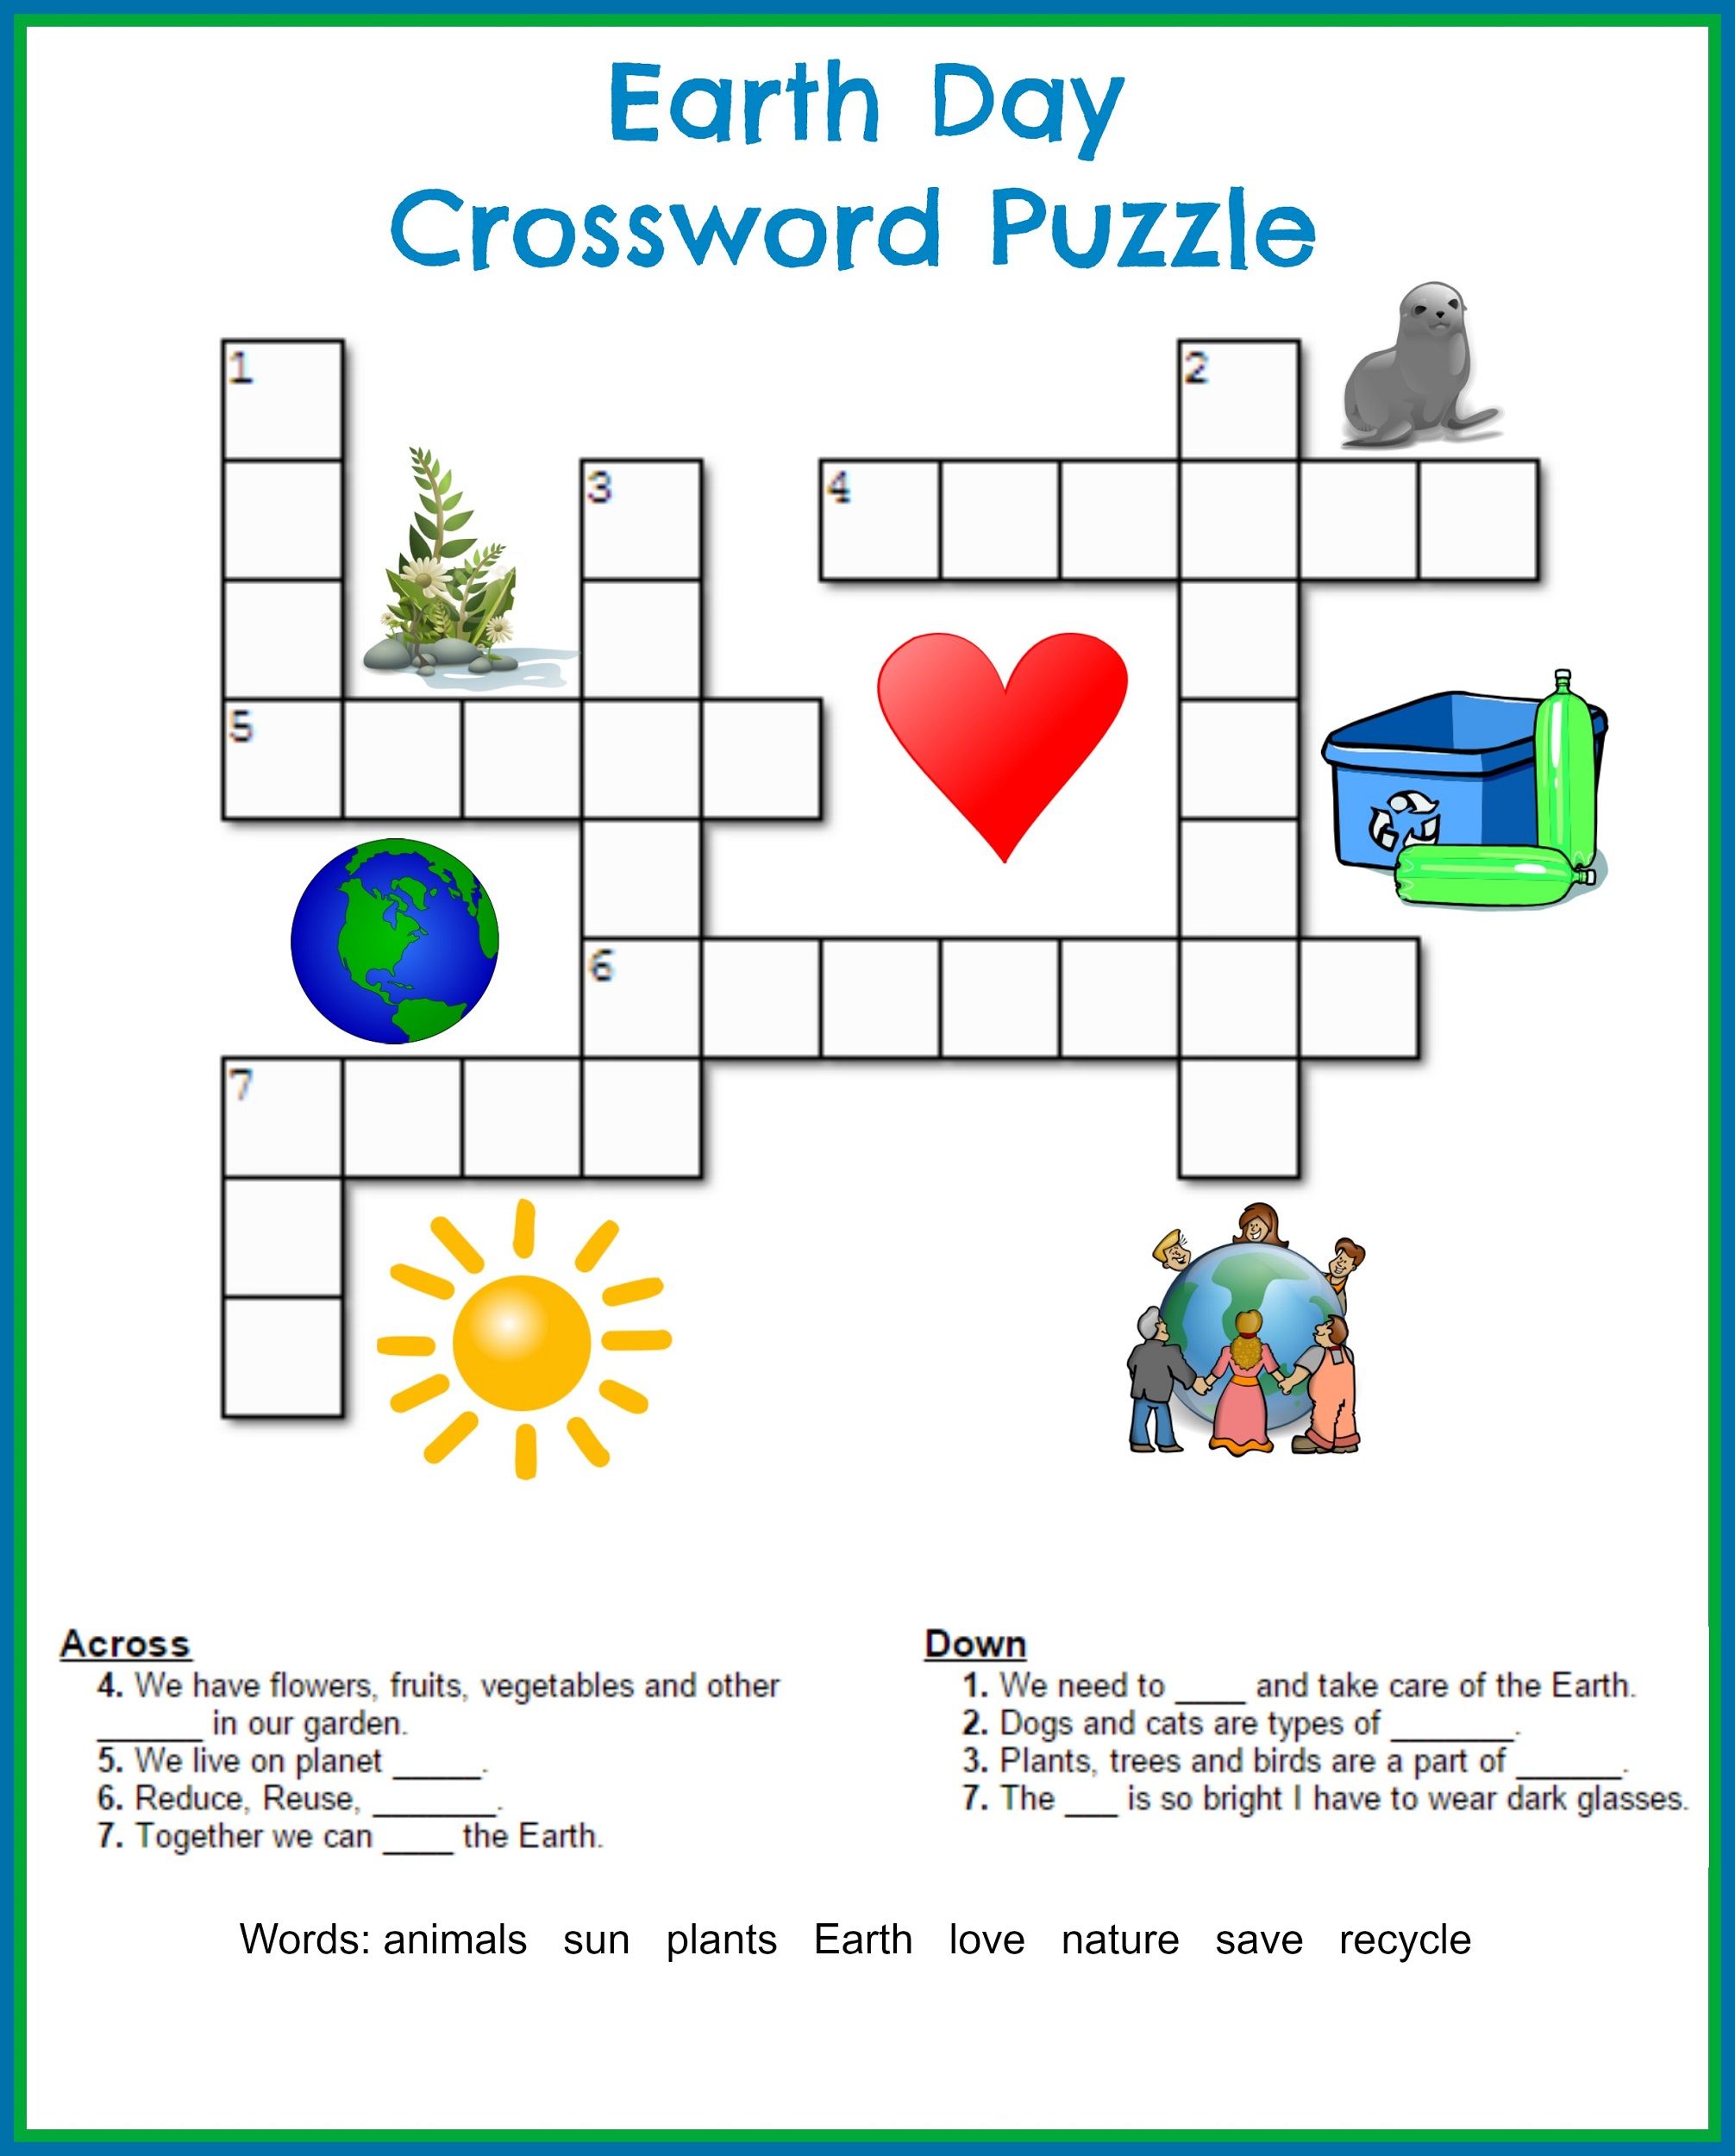 crosswords-for-kids-virtweed